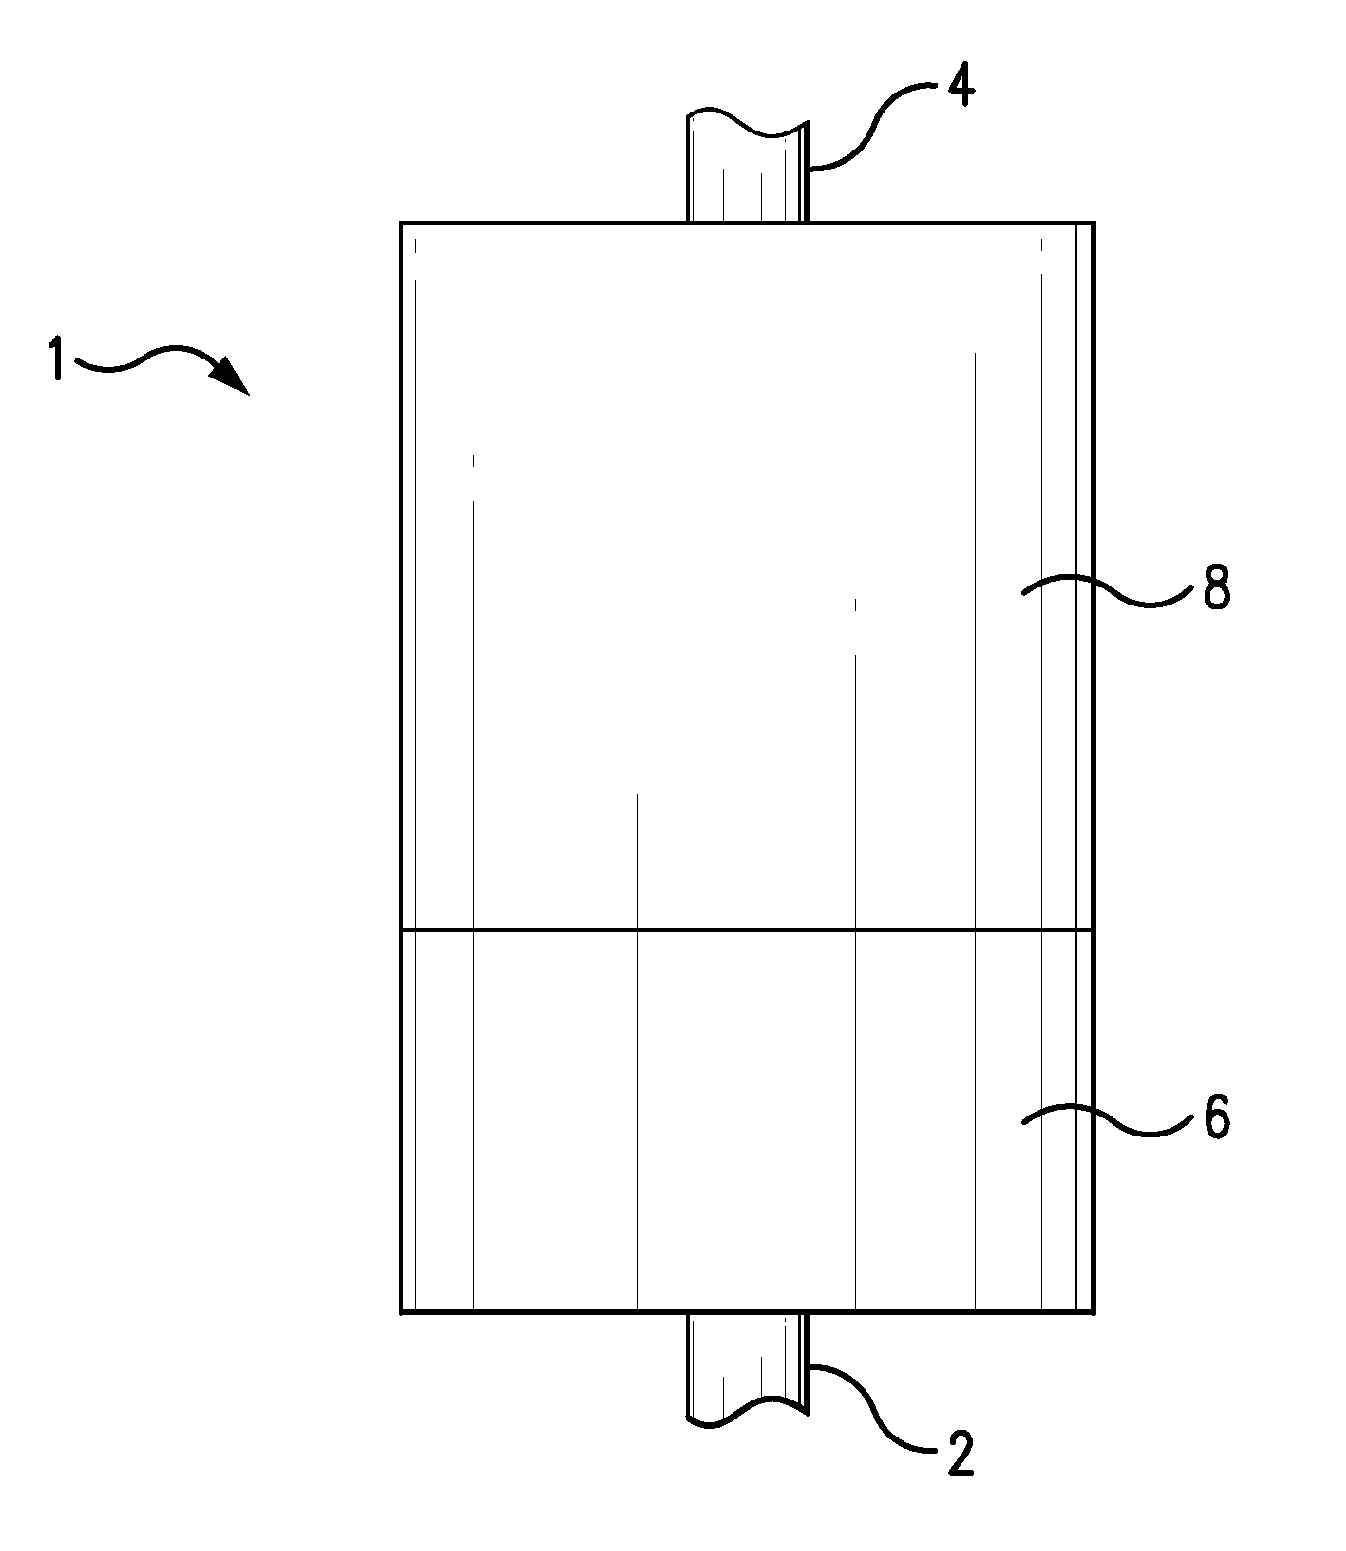 Water purification cartridge using zirconium ion-exchange sorbents